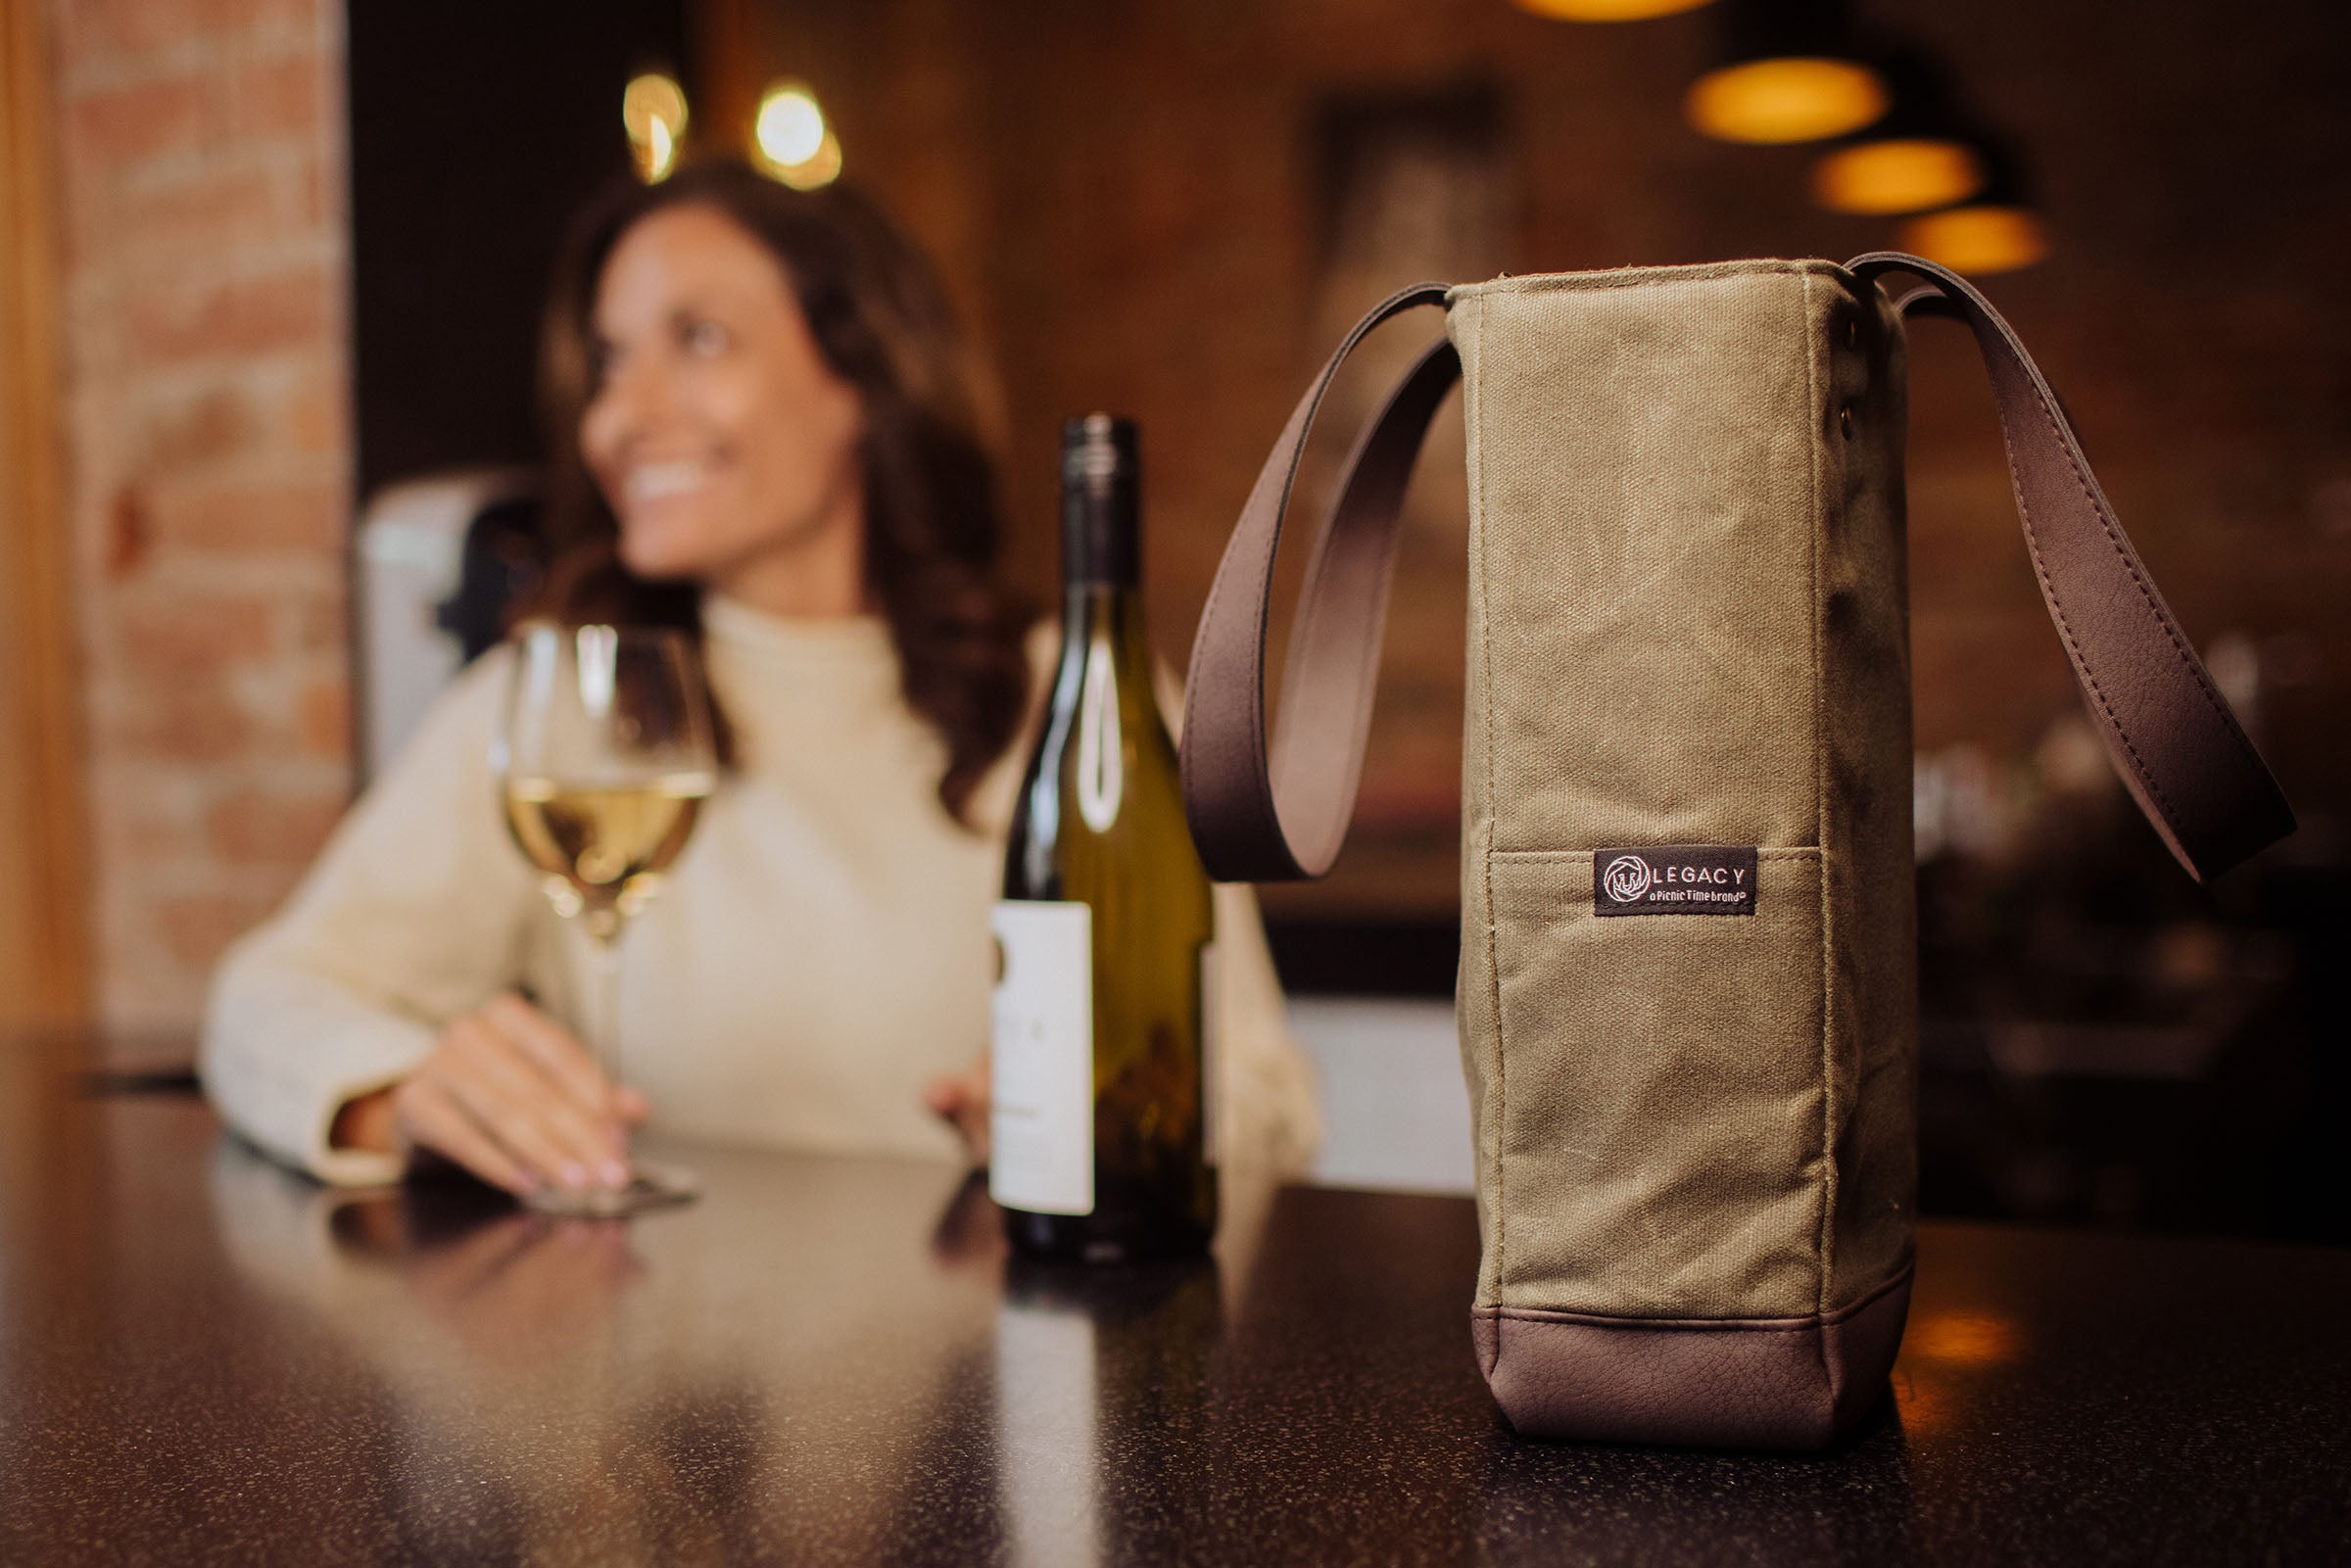 Buffalo Bills - 2 Bottle Insulated Wine Cooler Bag